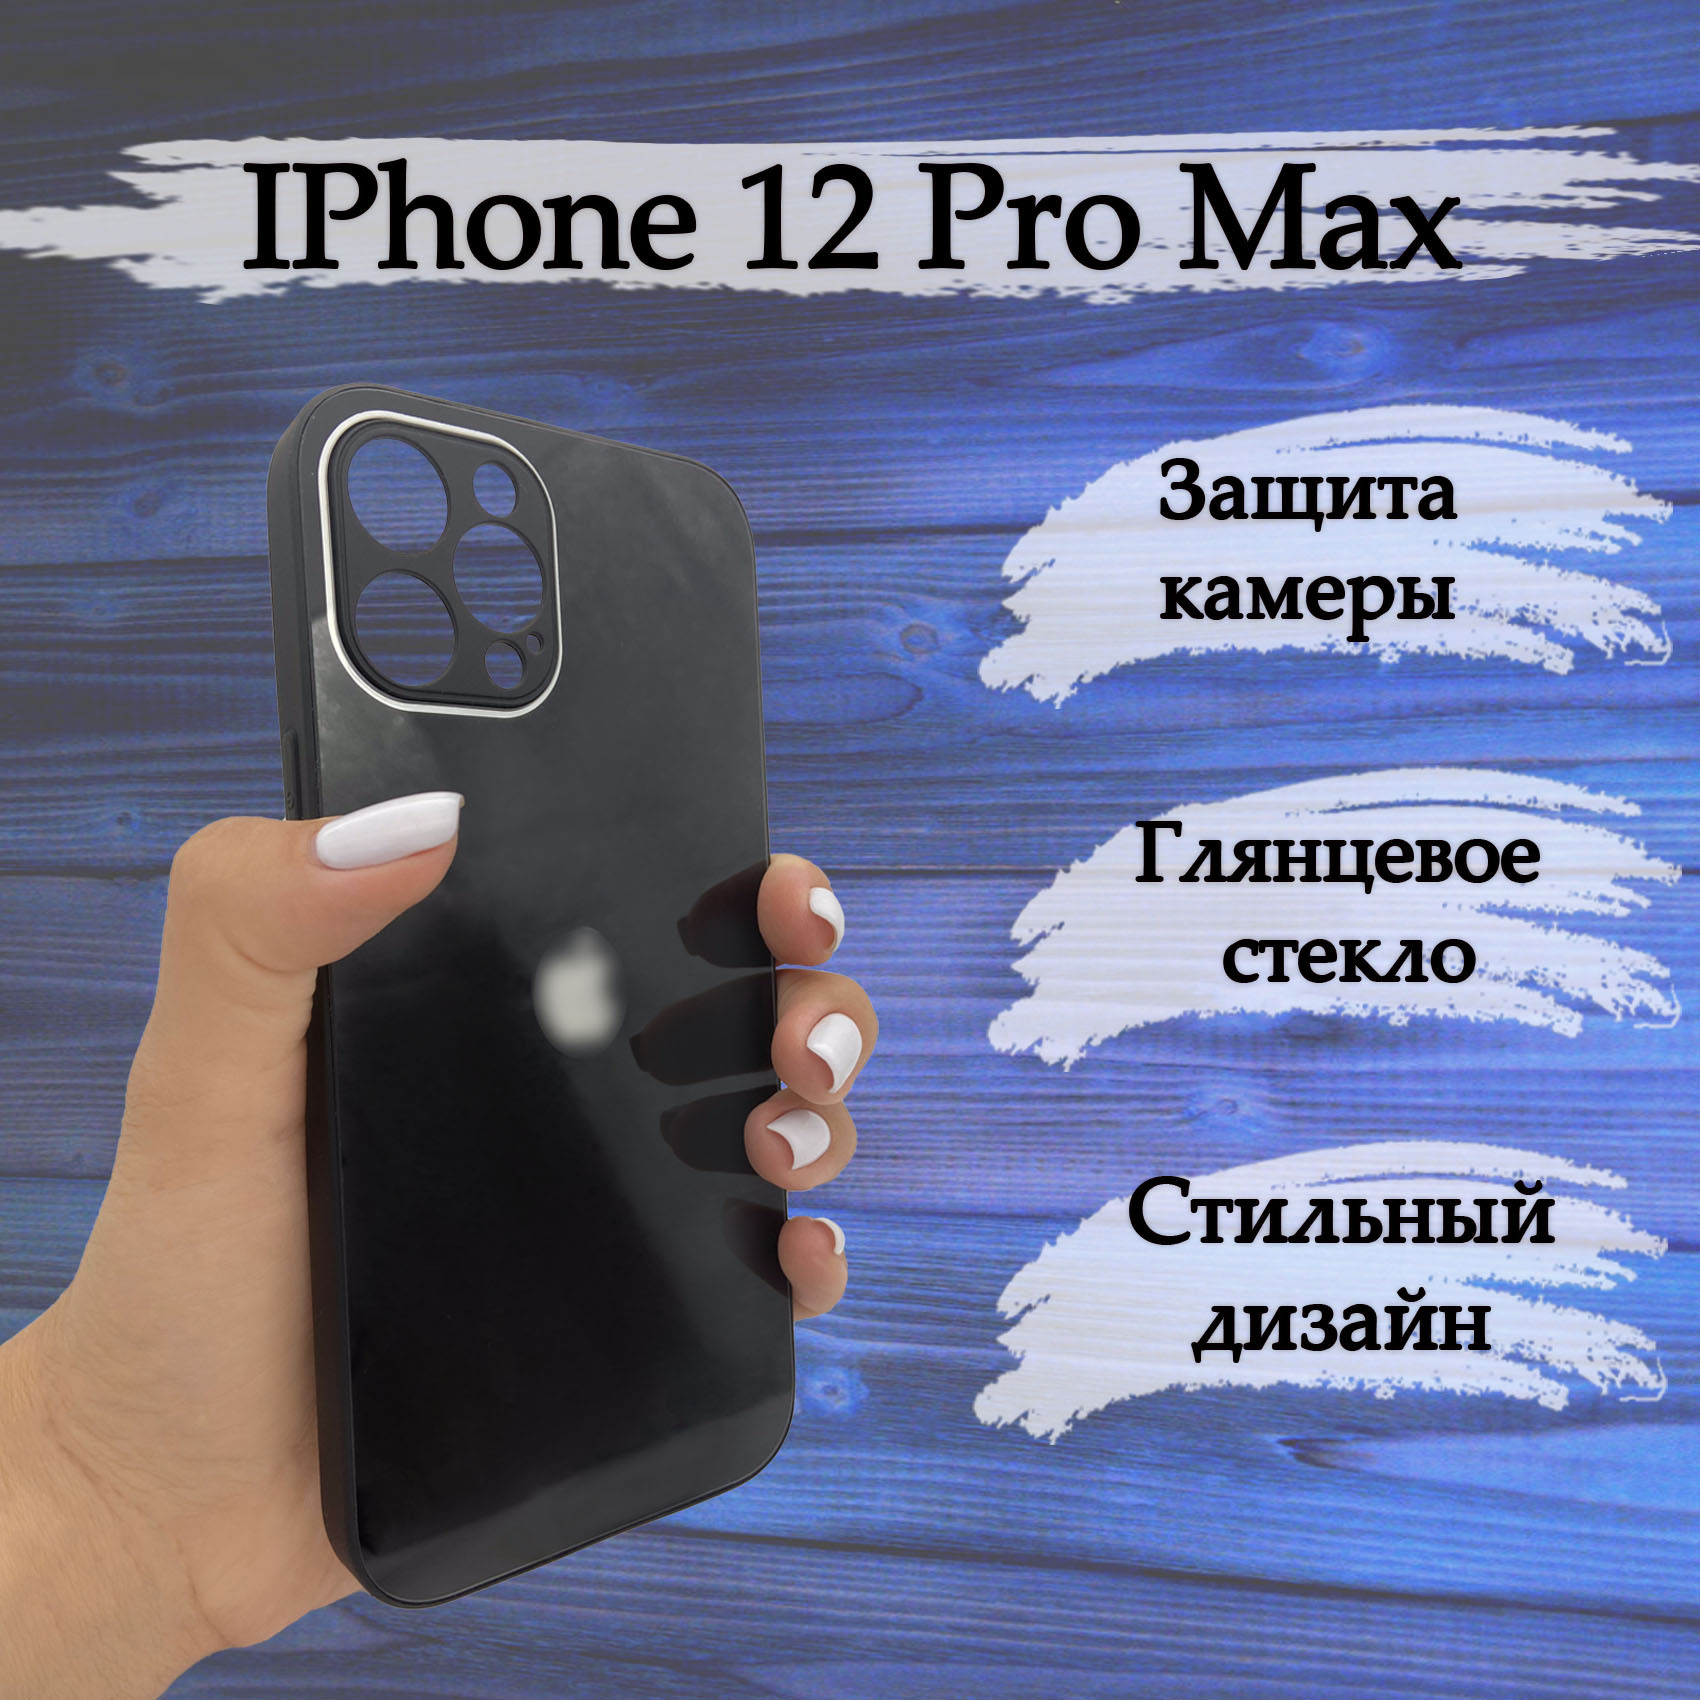 Iphone 12 Pro Max купить